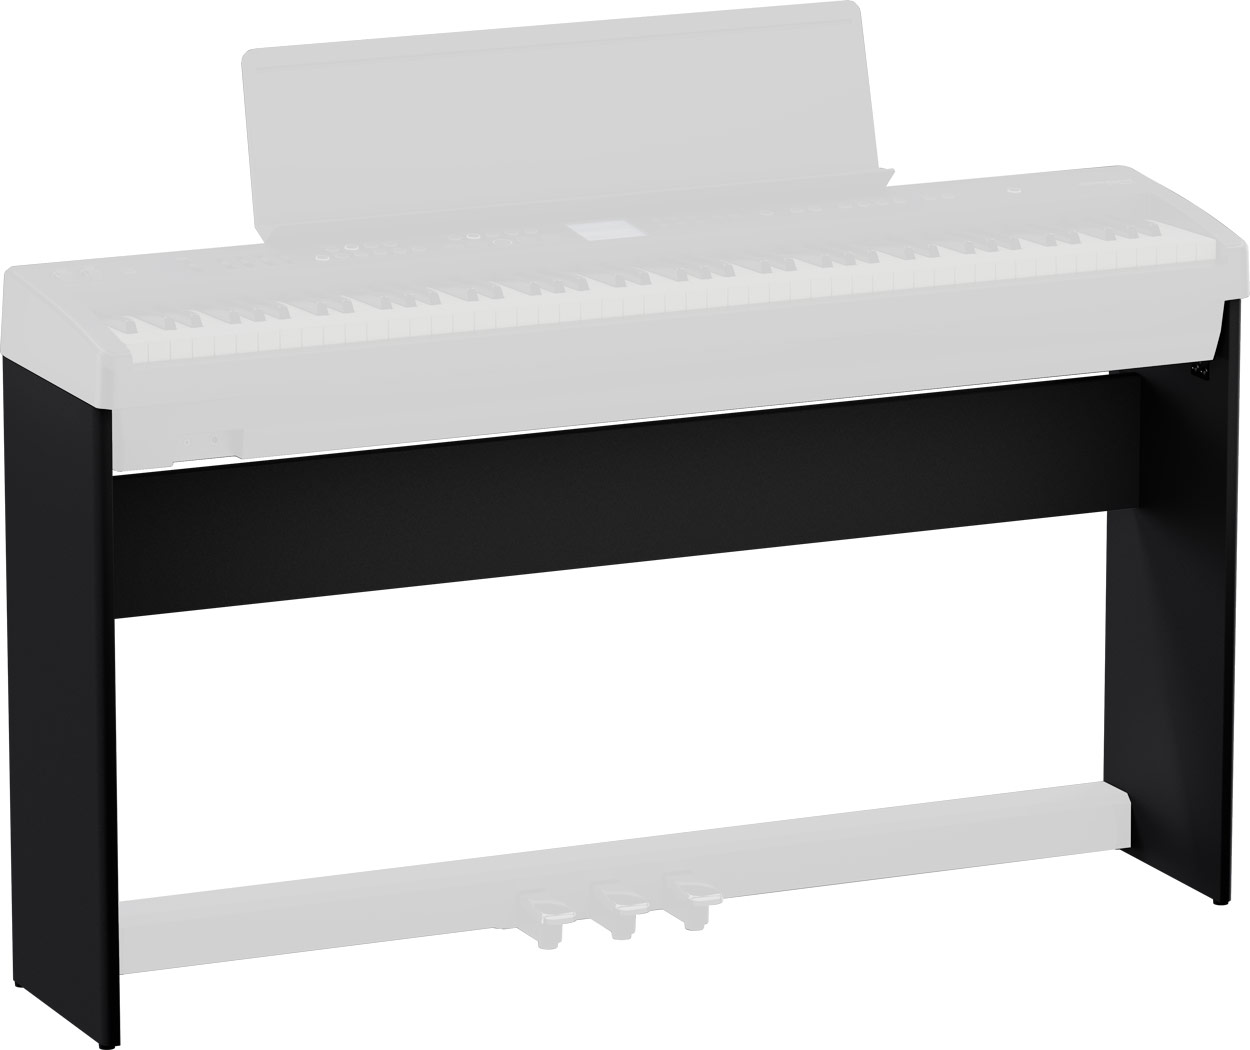 KSFE50 Stand for FP-E50 Digital Piano